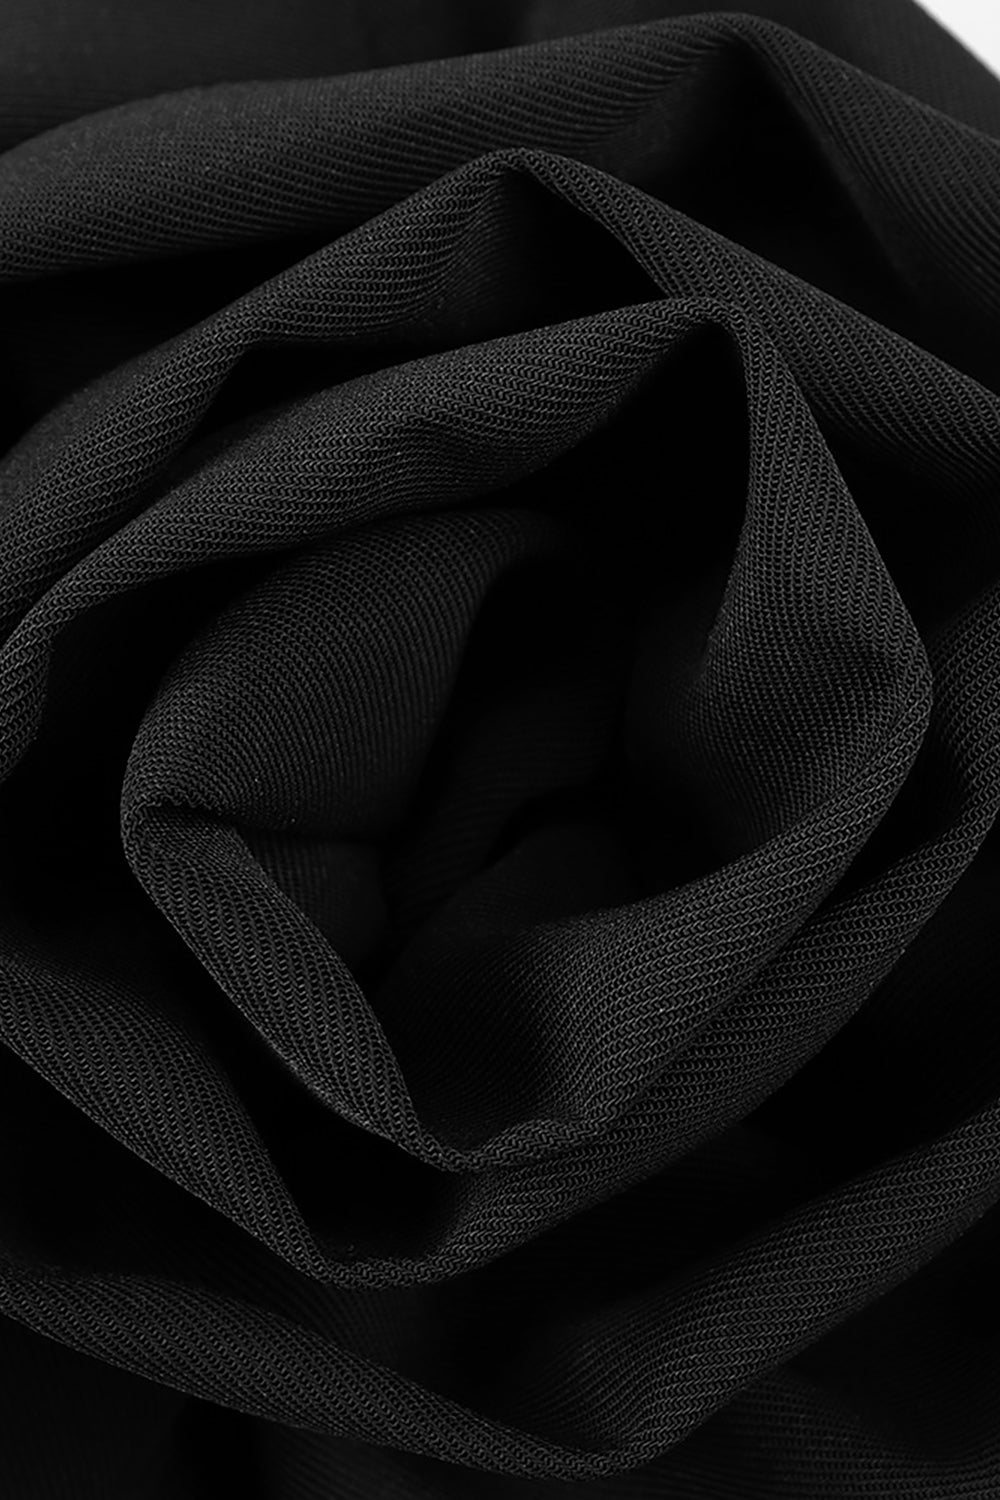 Flower Applique Bustier Style Bandage Top In Black